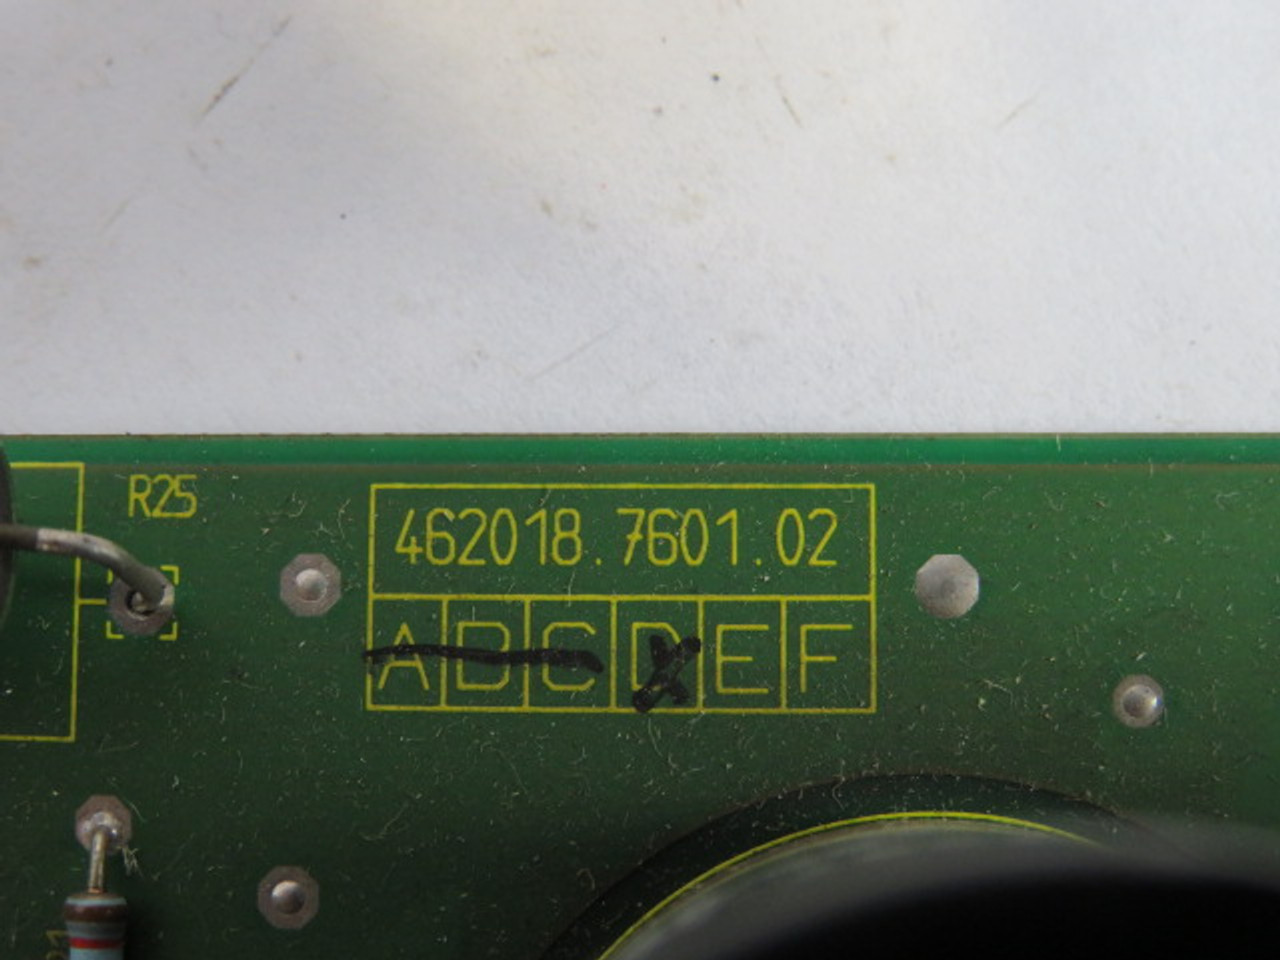 Siemens 462018.7601.02 Simodrive Capacitor Board USED